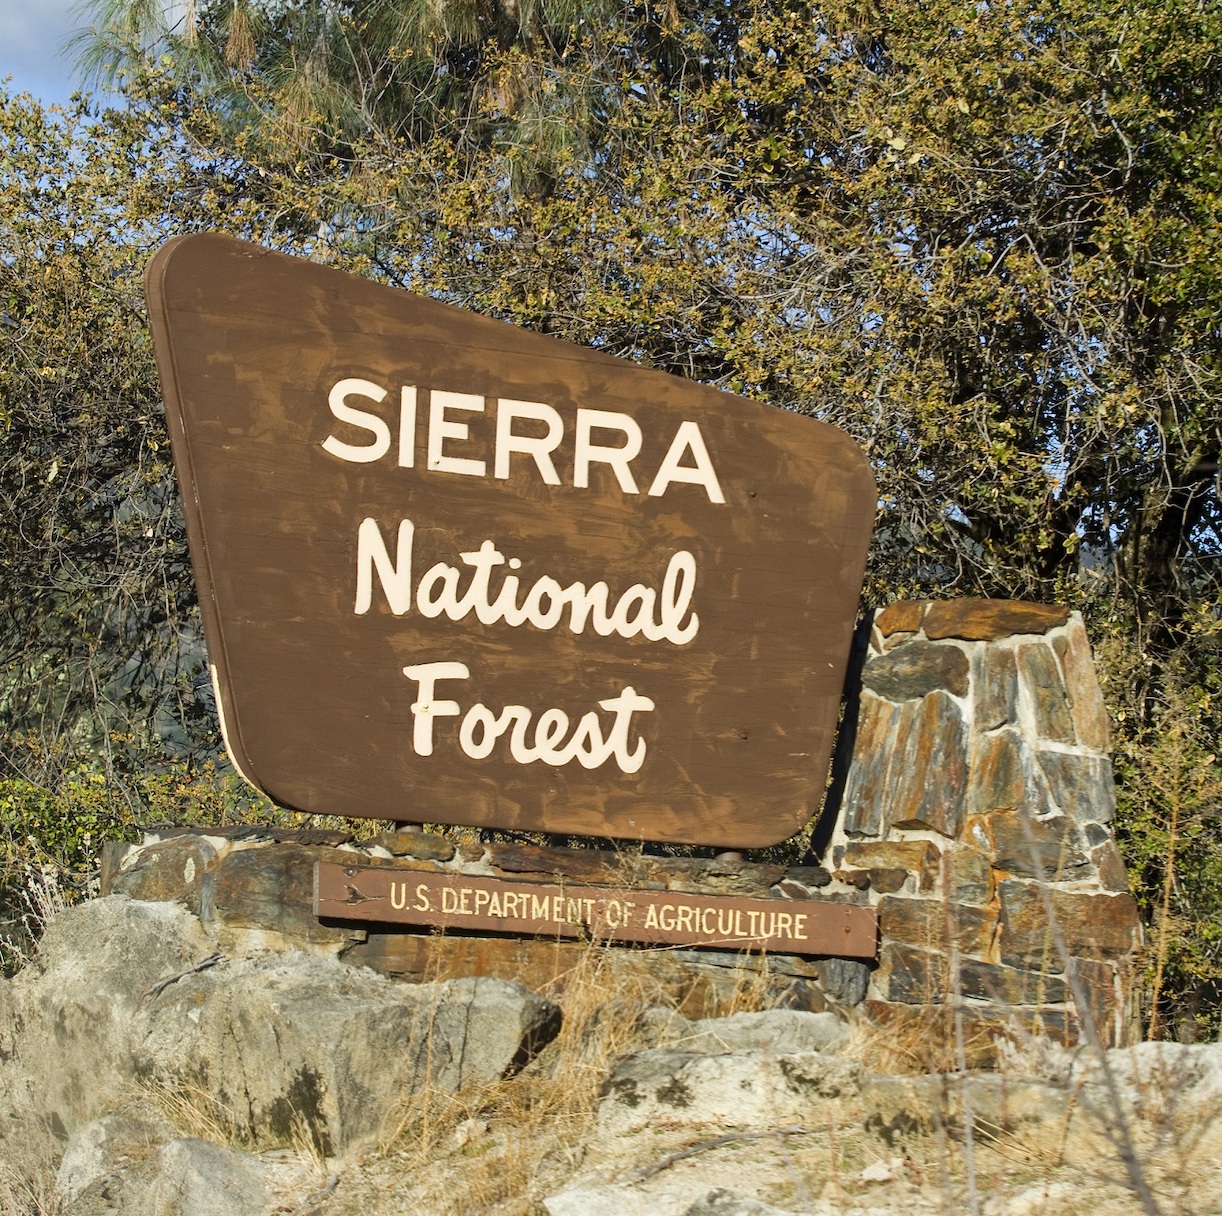 Sierra National Forest gerrish